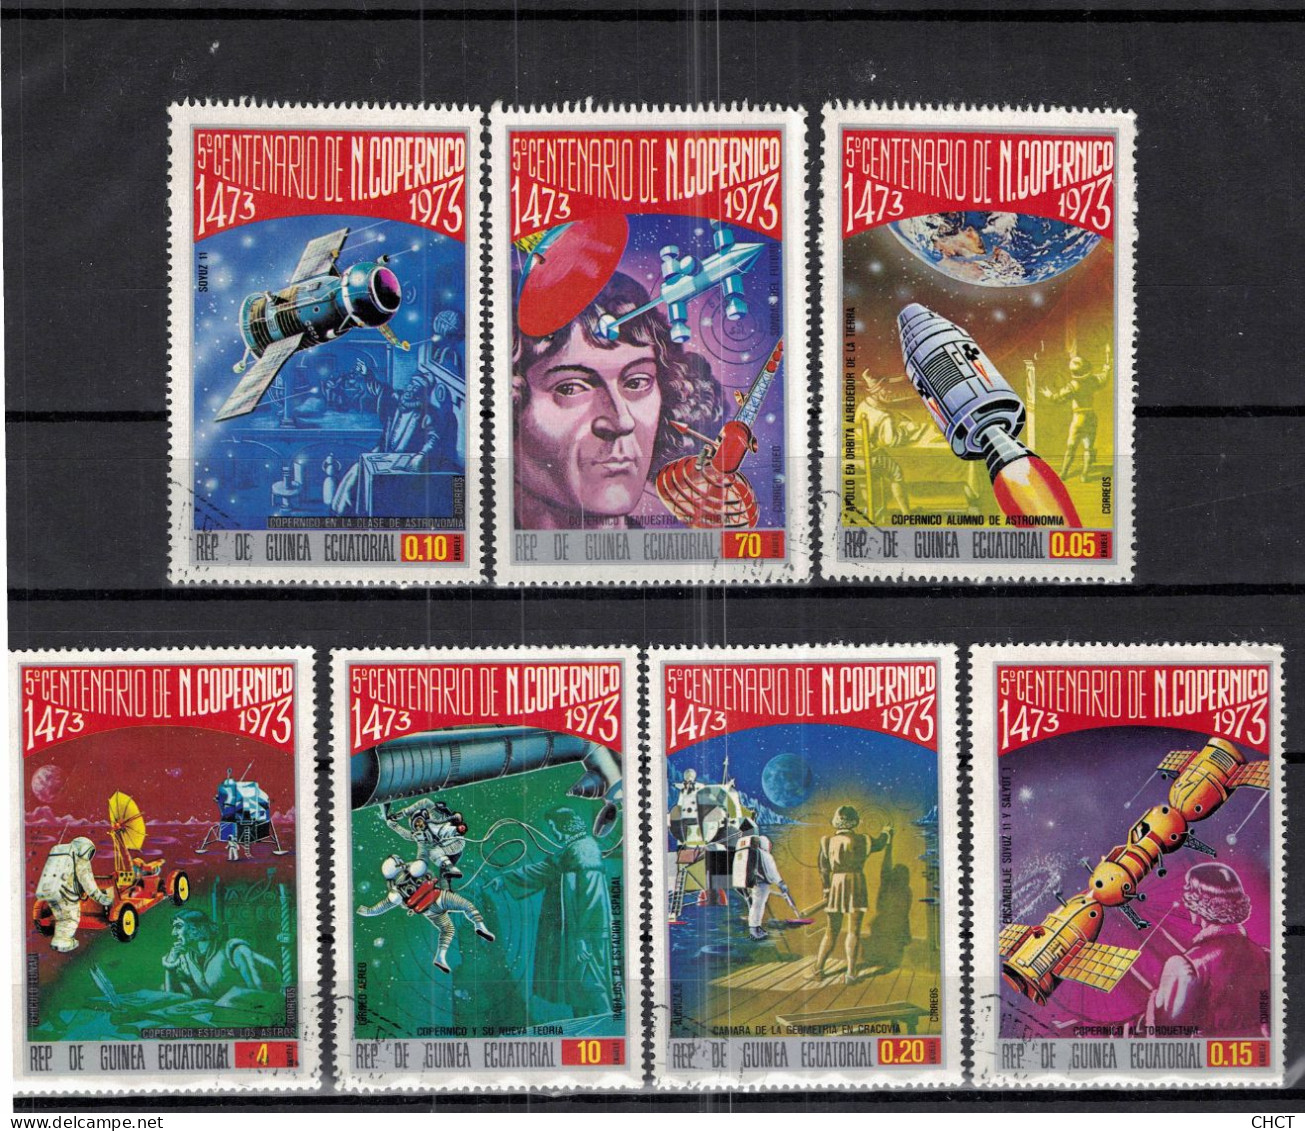 CHCT80 - Space, Cosmos, Rocket, Used, Complete Series, 1974, Equatorial Guinea - Equatorial Guinea